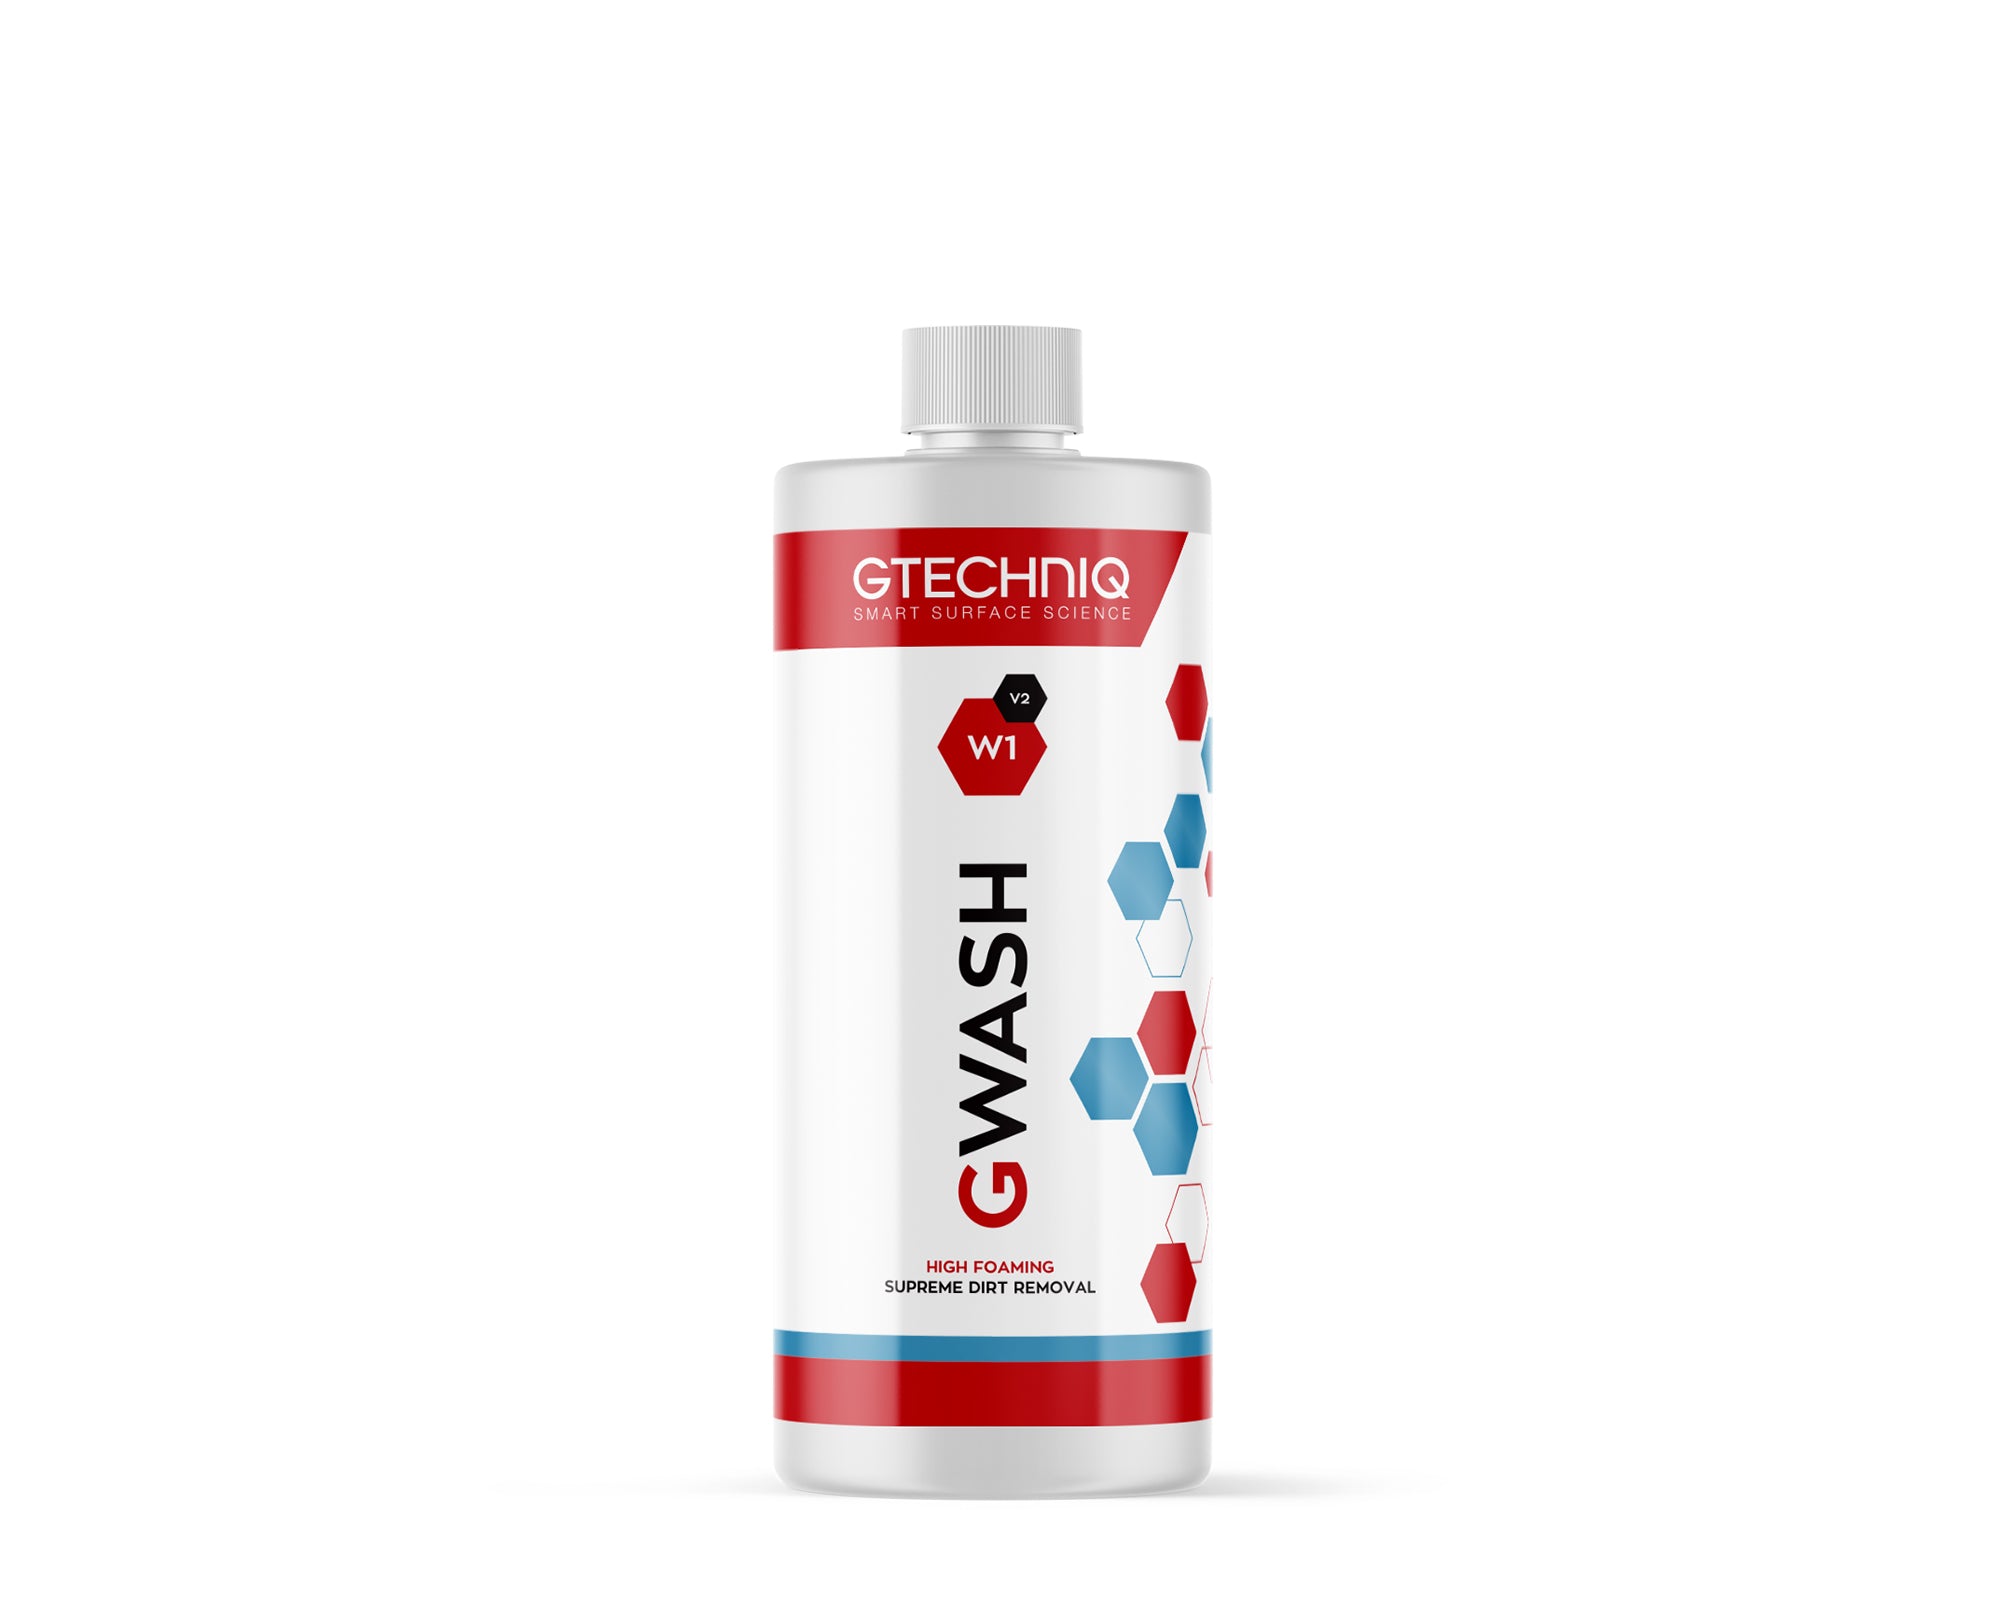 Gtechniq - Gwash